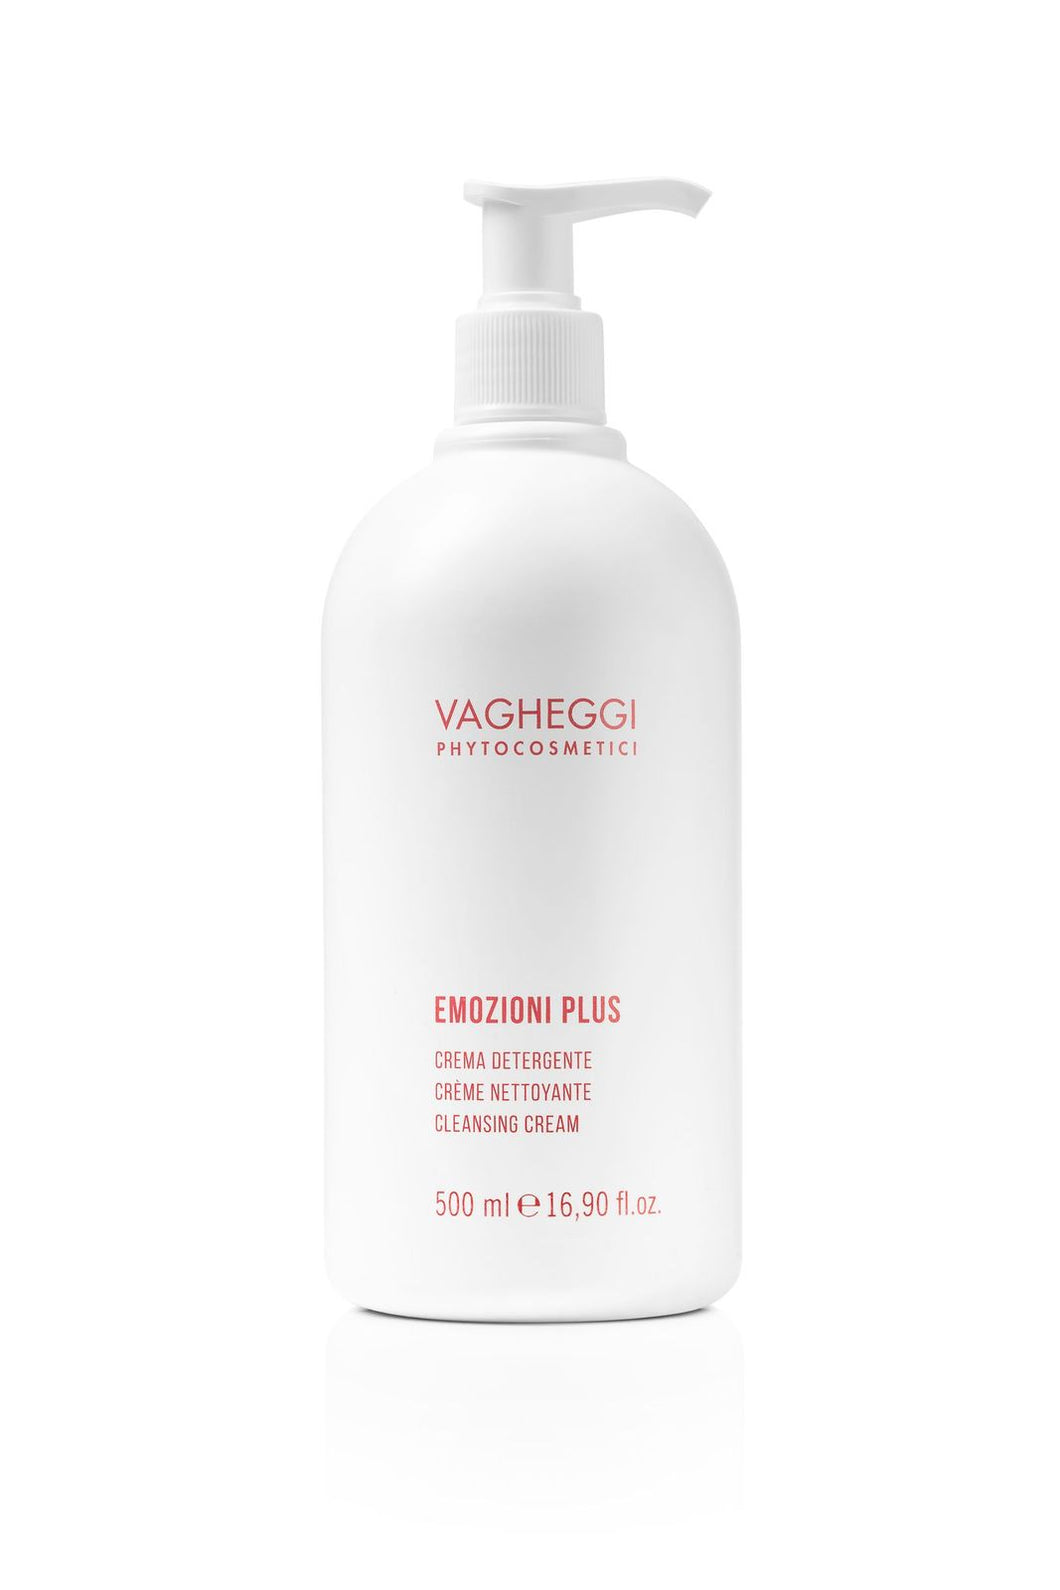 Vagheggi Emozioni Plus Cleansing Cream 500ml - Professional Size - Professional Salon Brands